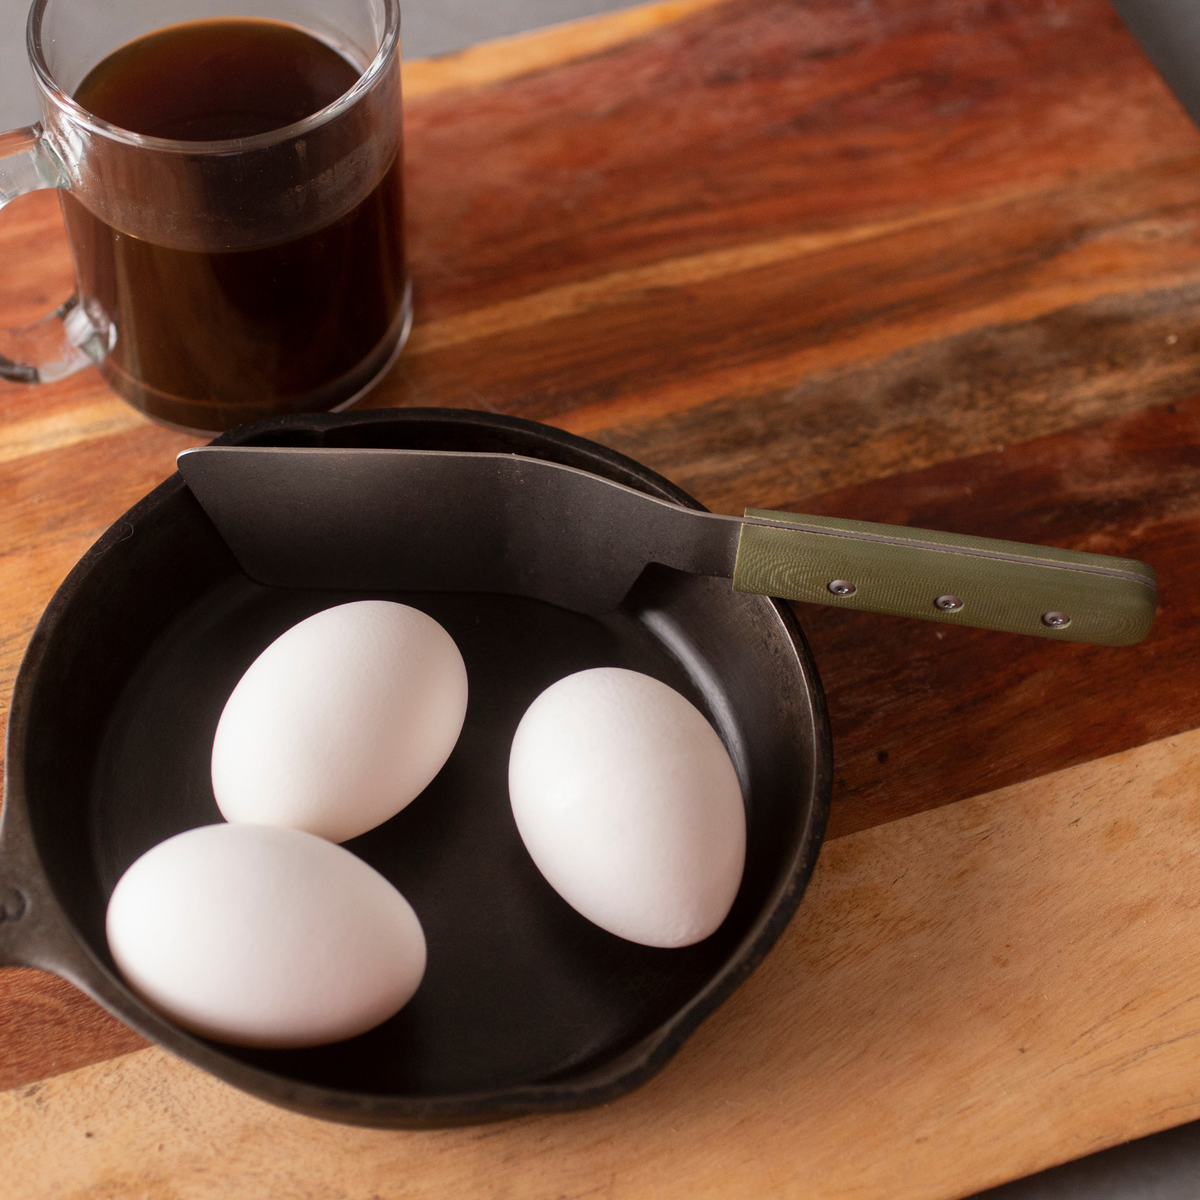 a mini spatula sitting with 3 eggs